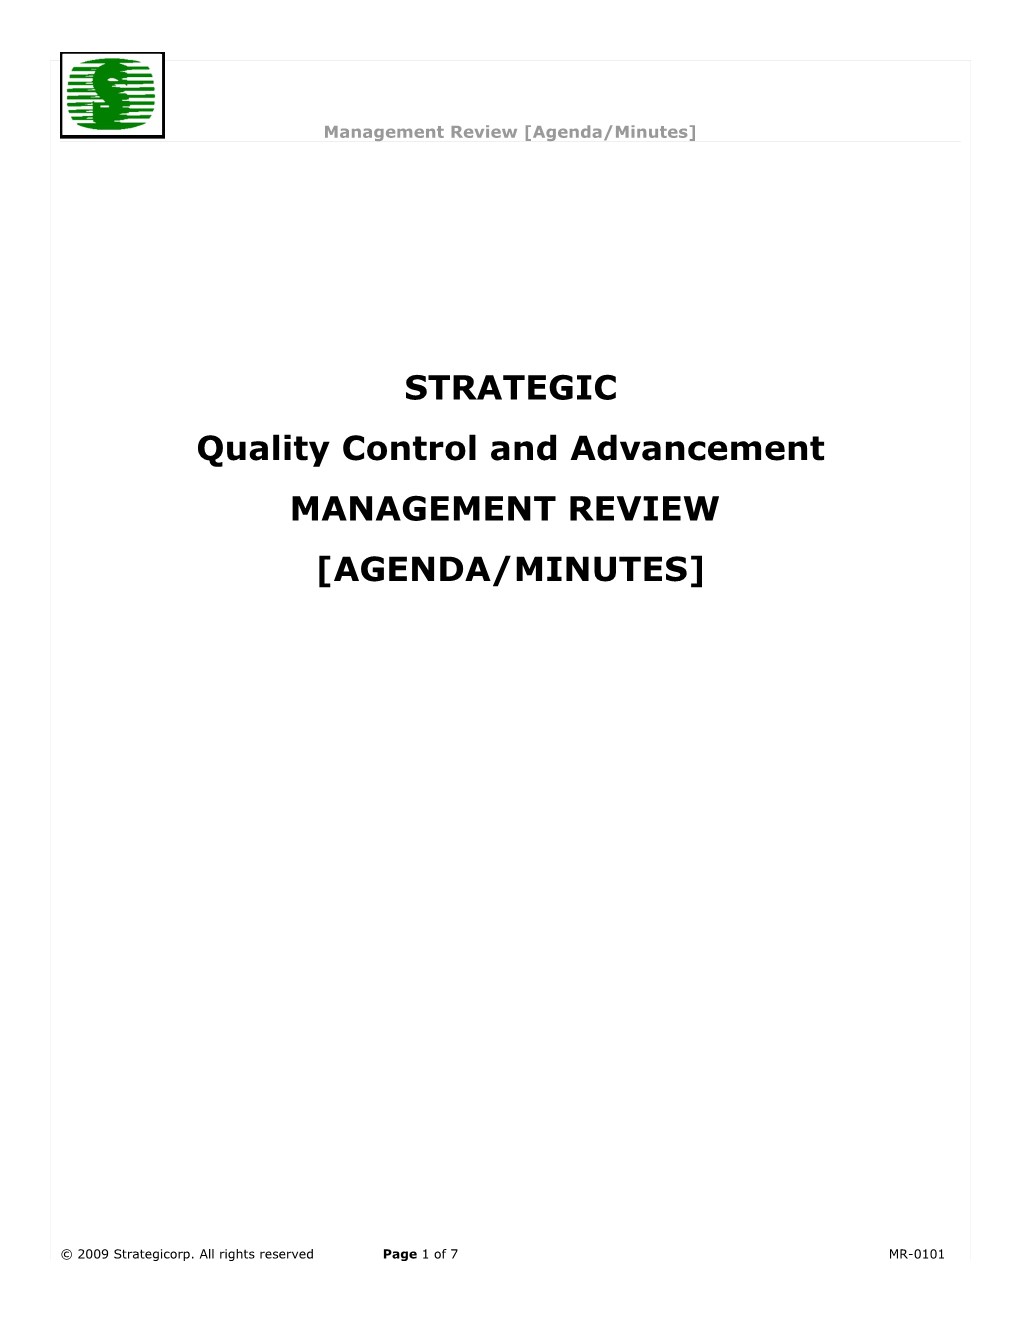 Management Review Minutes